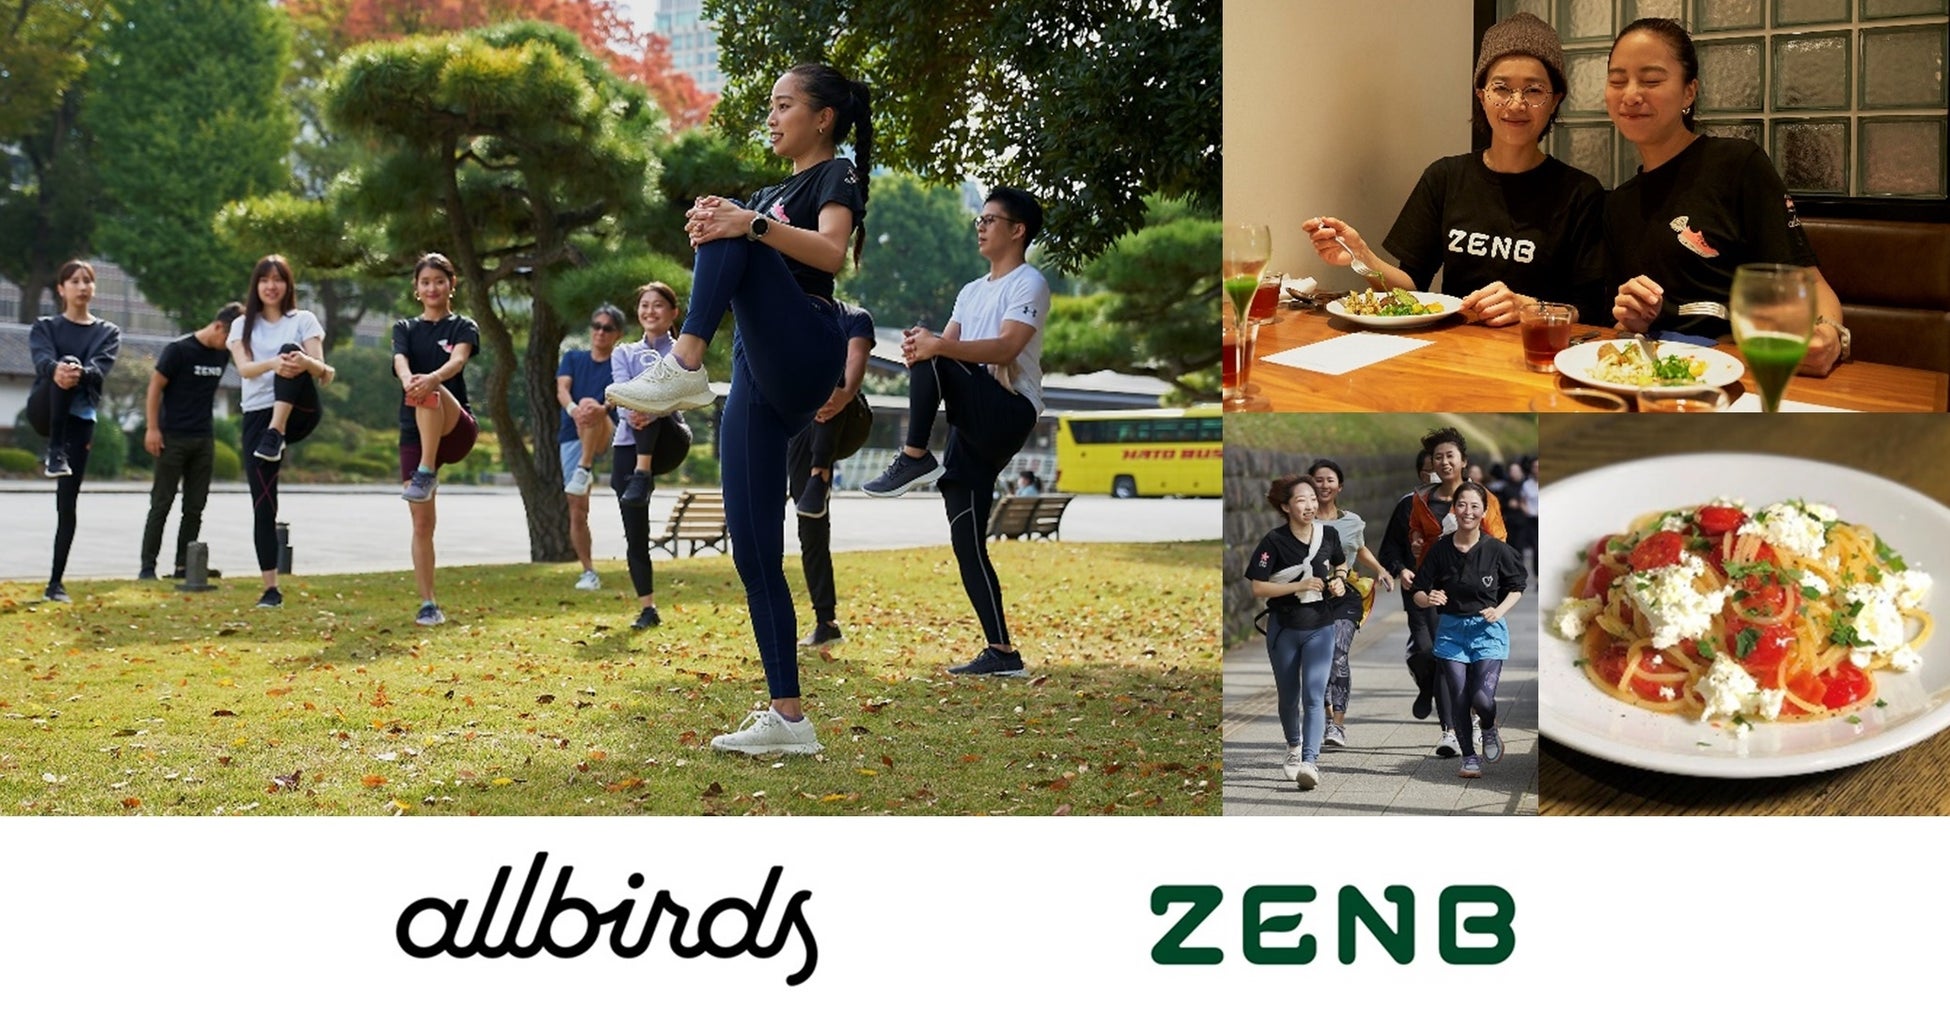 ZENBとAllbirdsのSakura Dashersがランニングと食を通じて、地球にも人にも優しく“続ける”を後押しする「続けて出会う、新しい自分。」を開催のサブ画像1